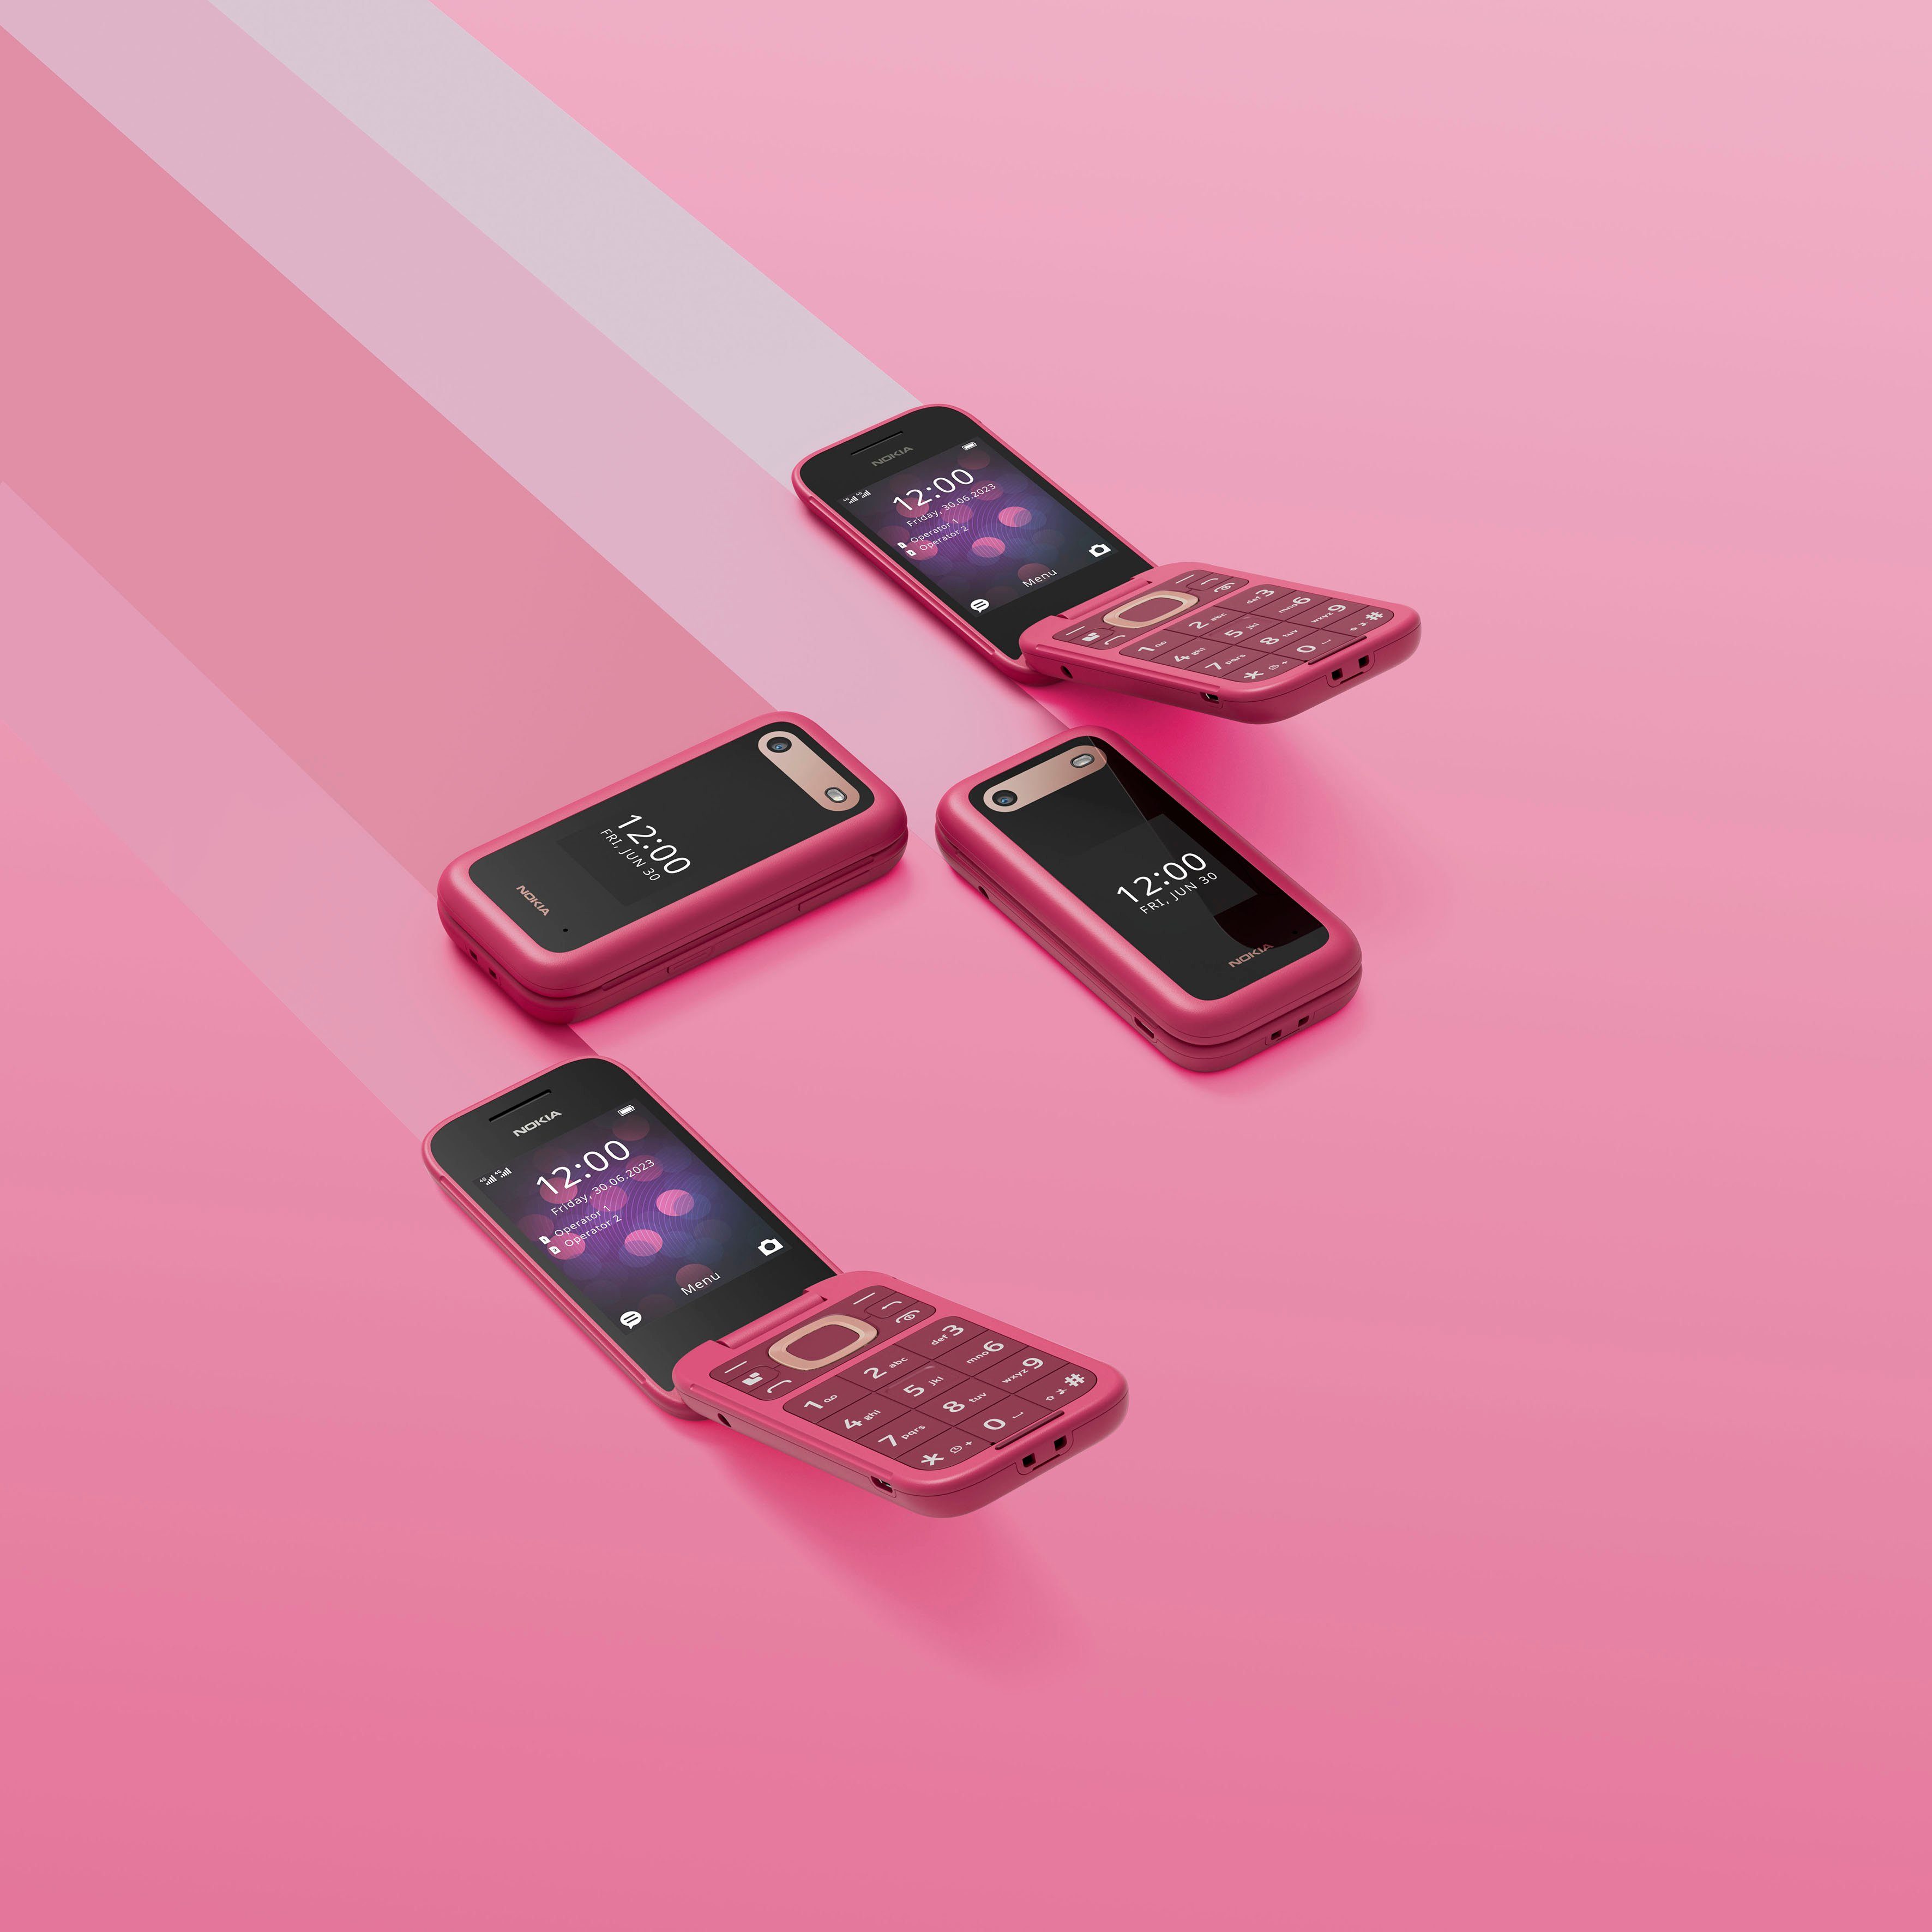 Nokia 2660 Flip GB cm/2,8 MP (7,11 0,3 Speicherplatz, Klapphandy Kamera) rosa 0,13 Zoll